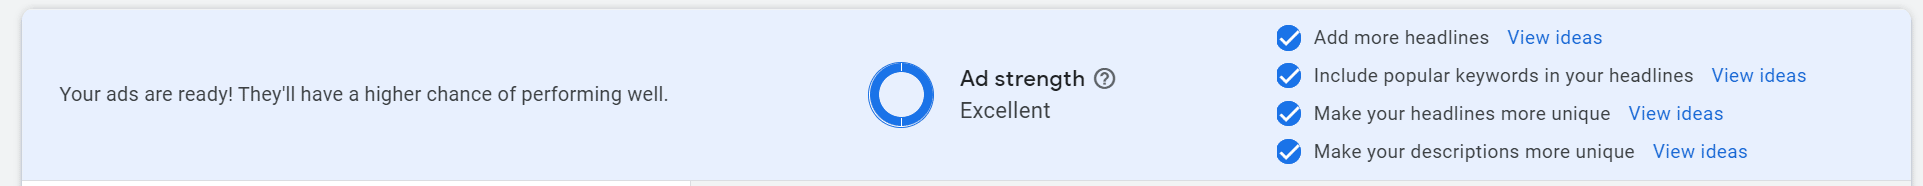 Google Ads optimisation ad strenght